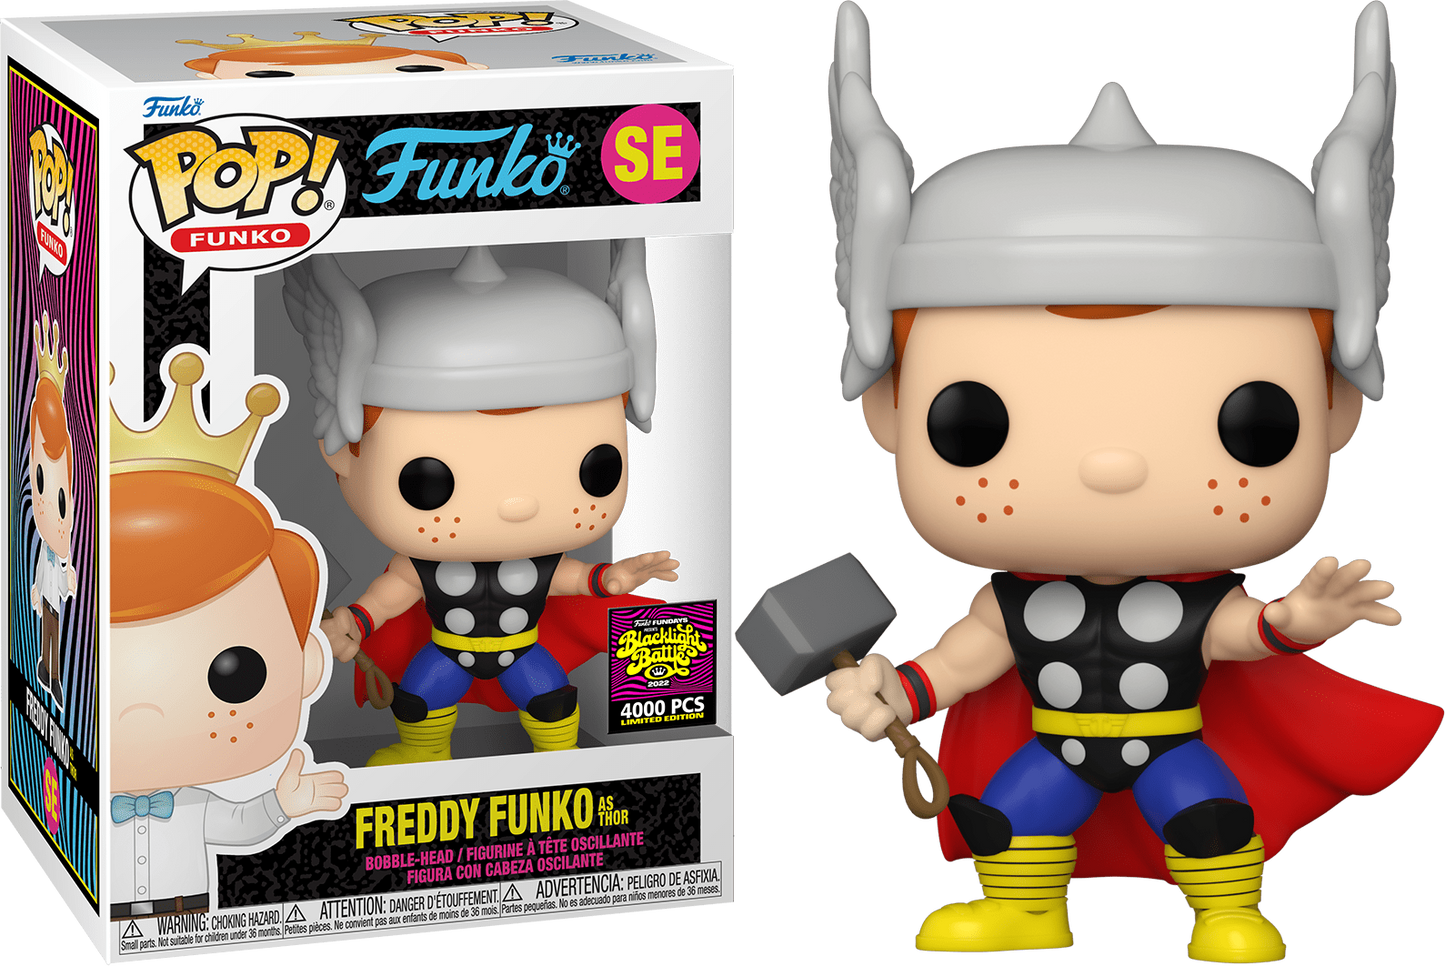 Freddy Funko as Thor [Blacklight Battles LE4000pcs]